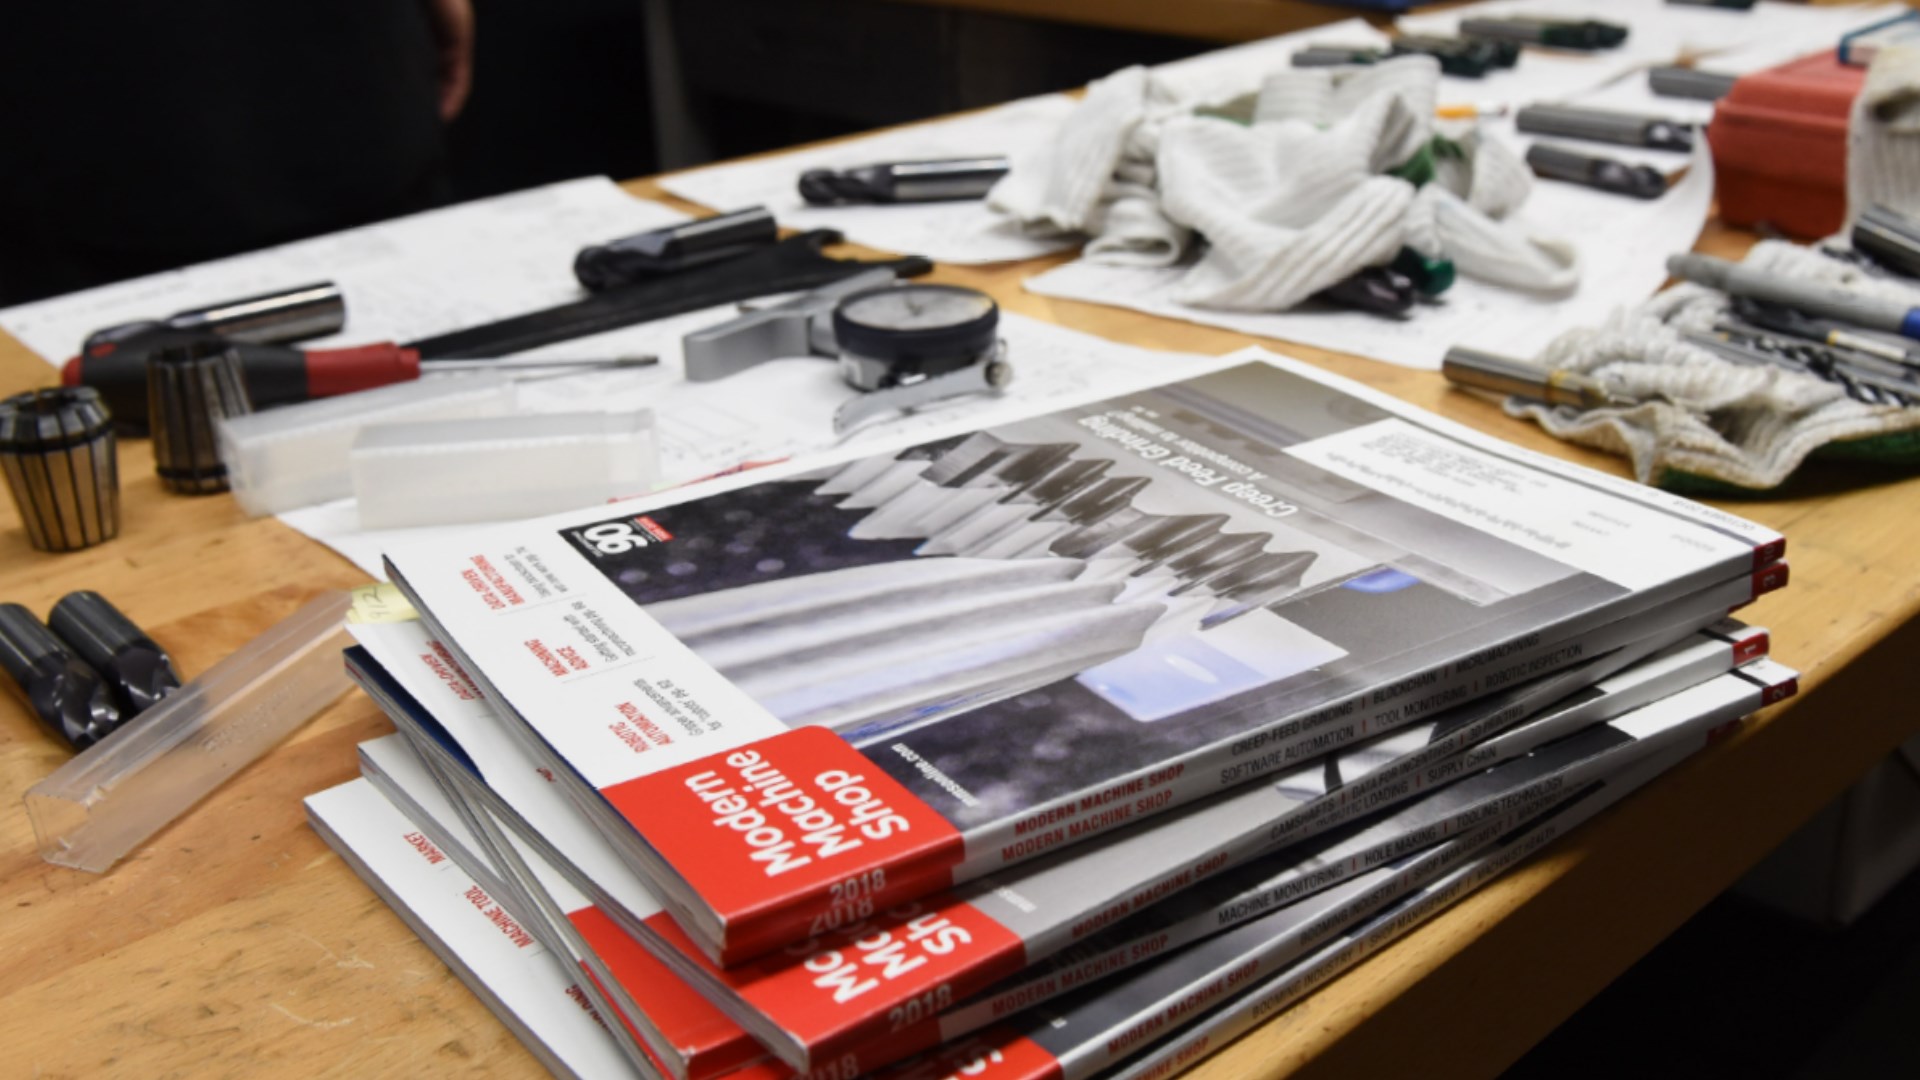 Workshop desk containing issues of Modern Machine Shop Magazine